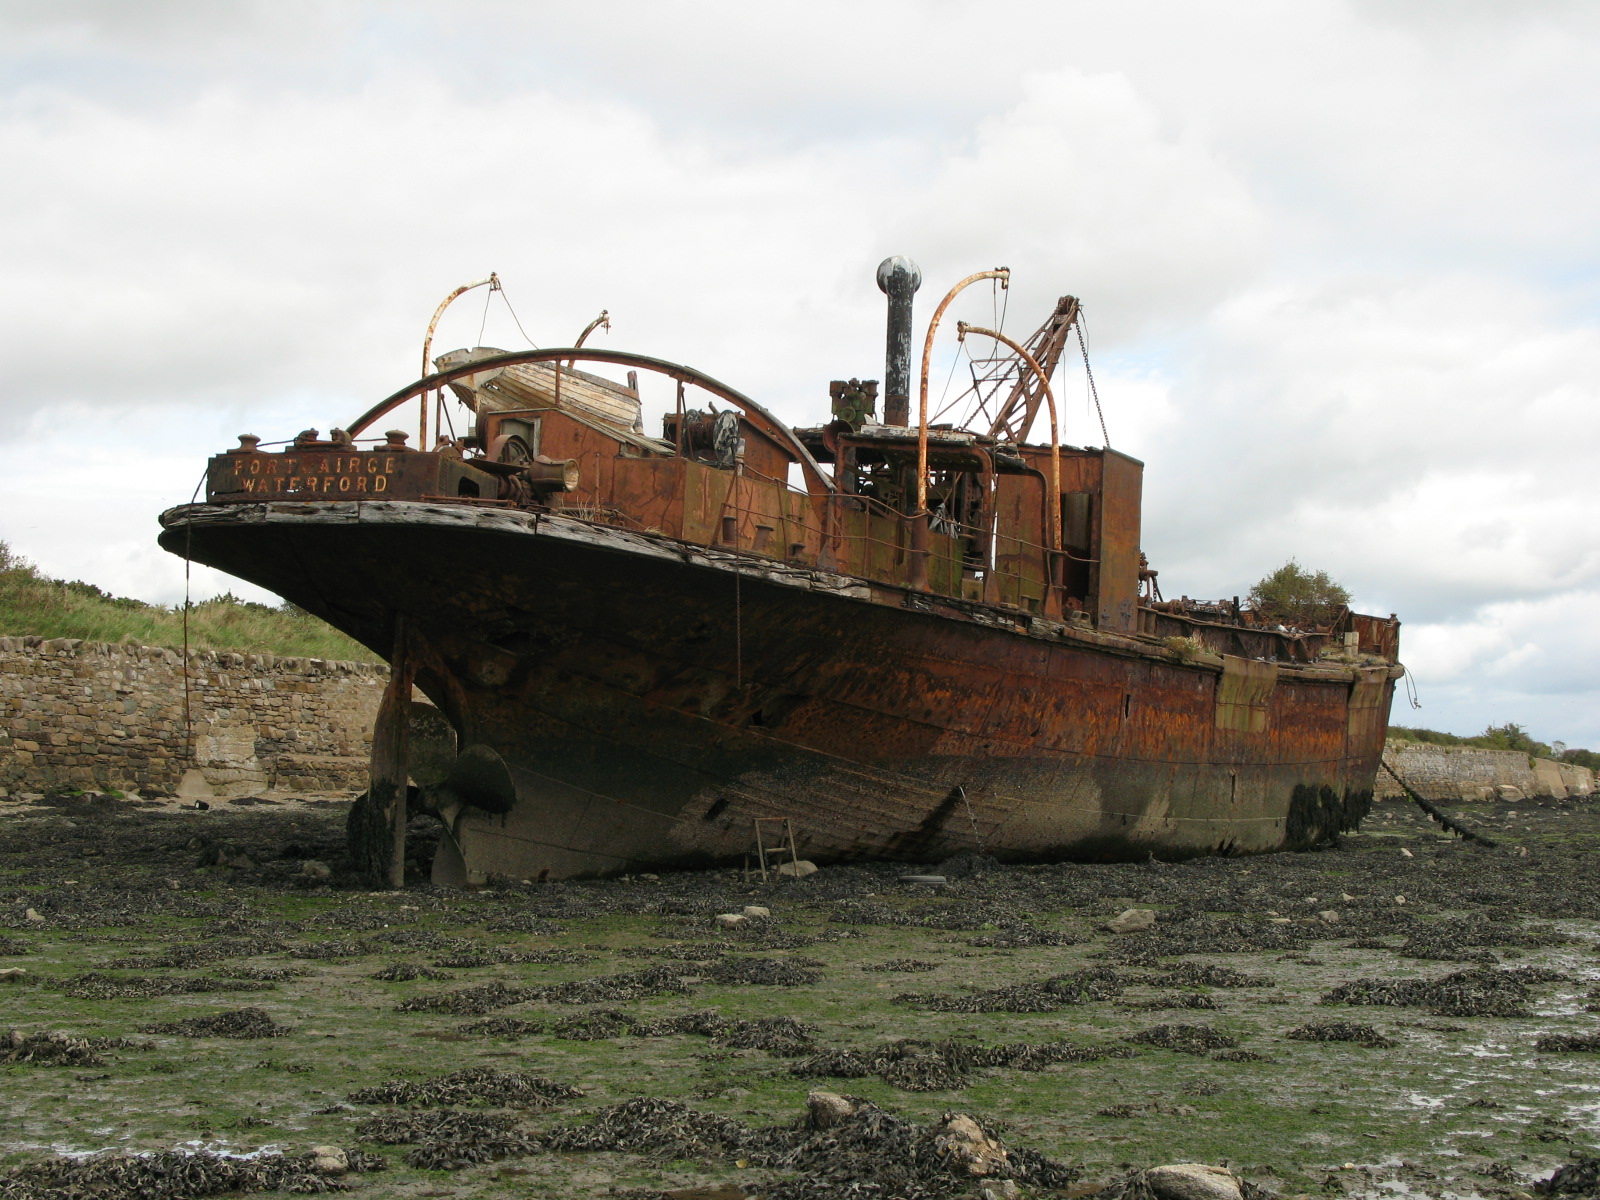 H.I.A.T. - Hey, I abandoned that!: Shipwrecks of the world